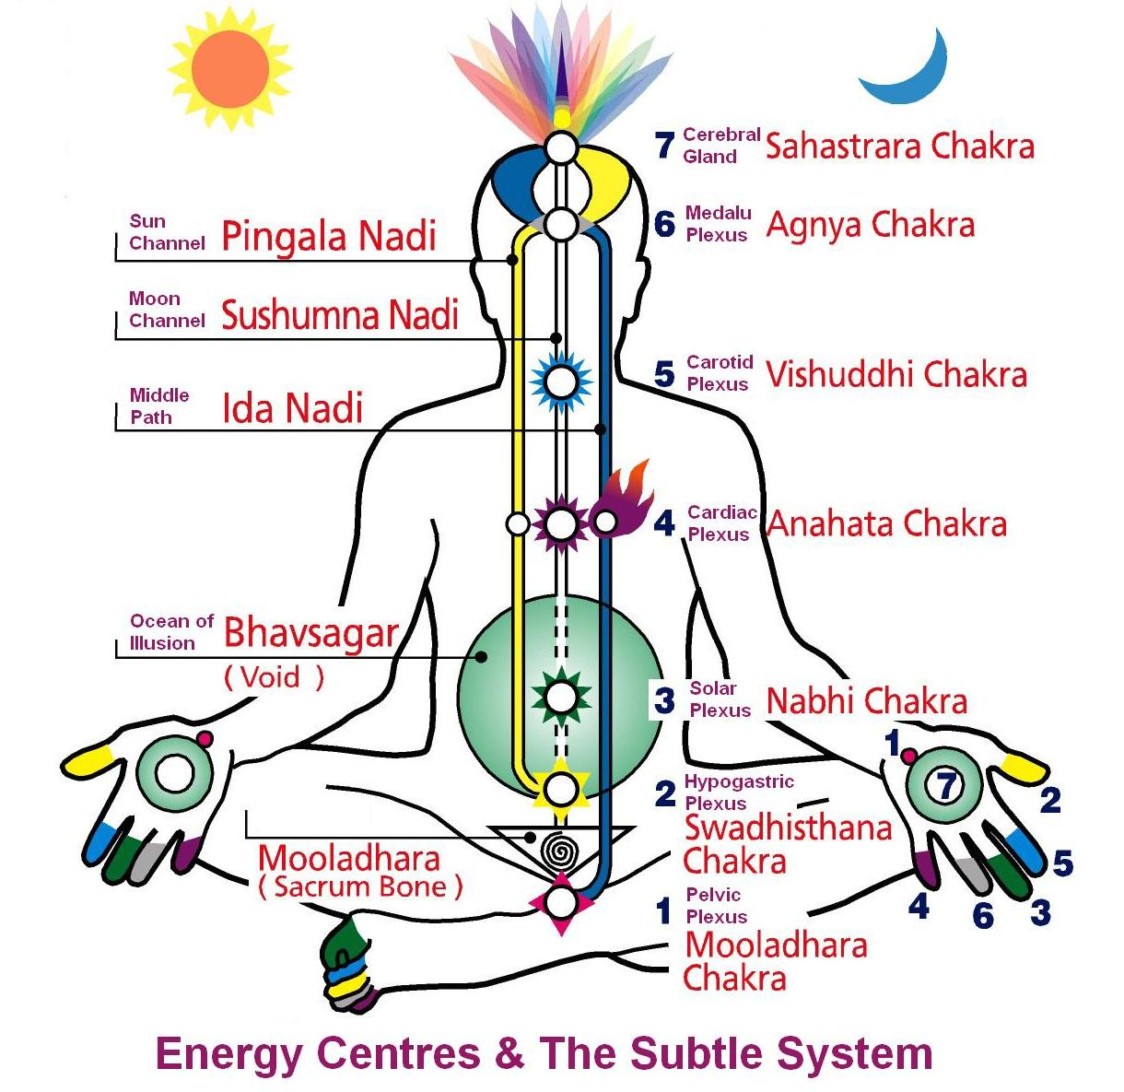 Prana: A essência vital do Kundalini Yoga